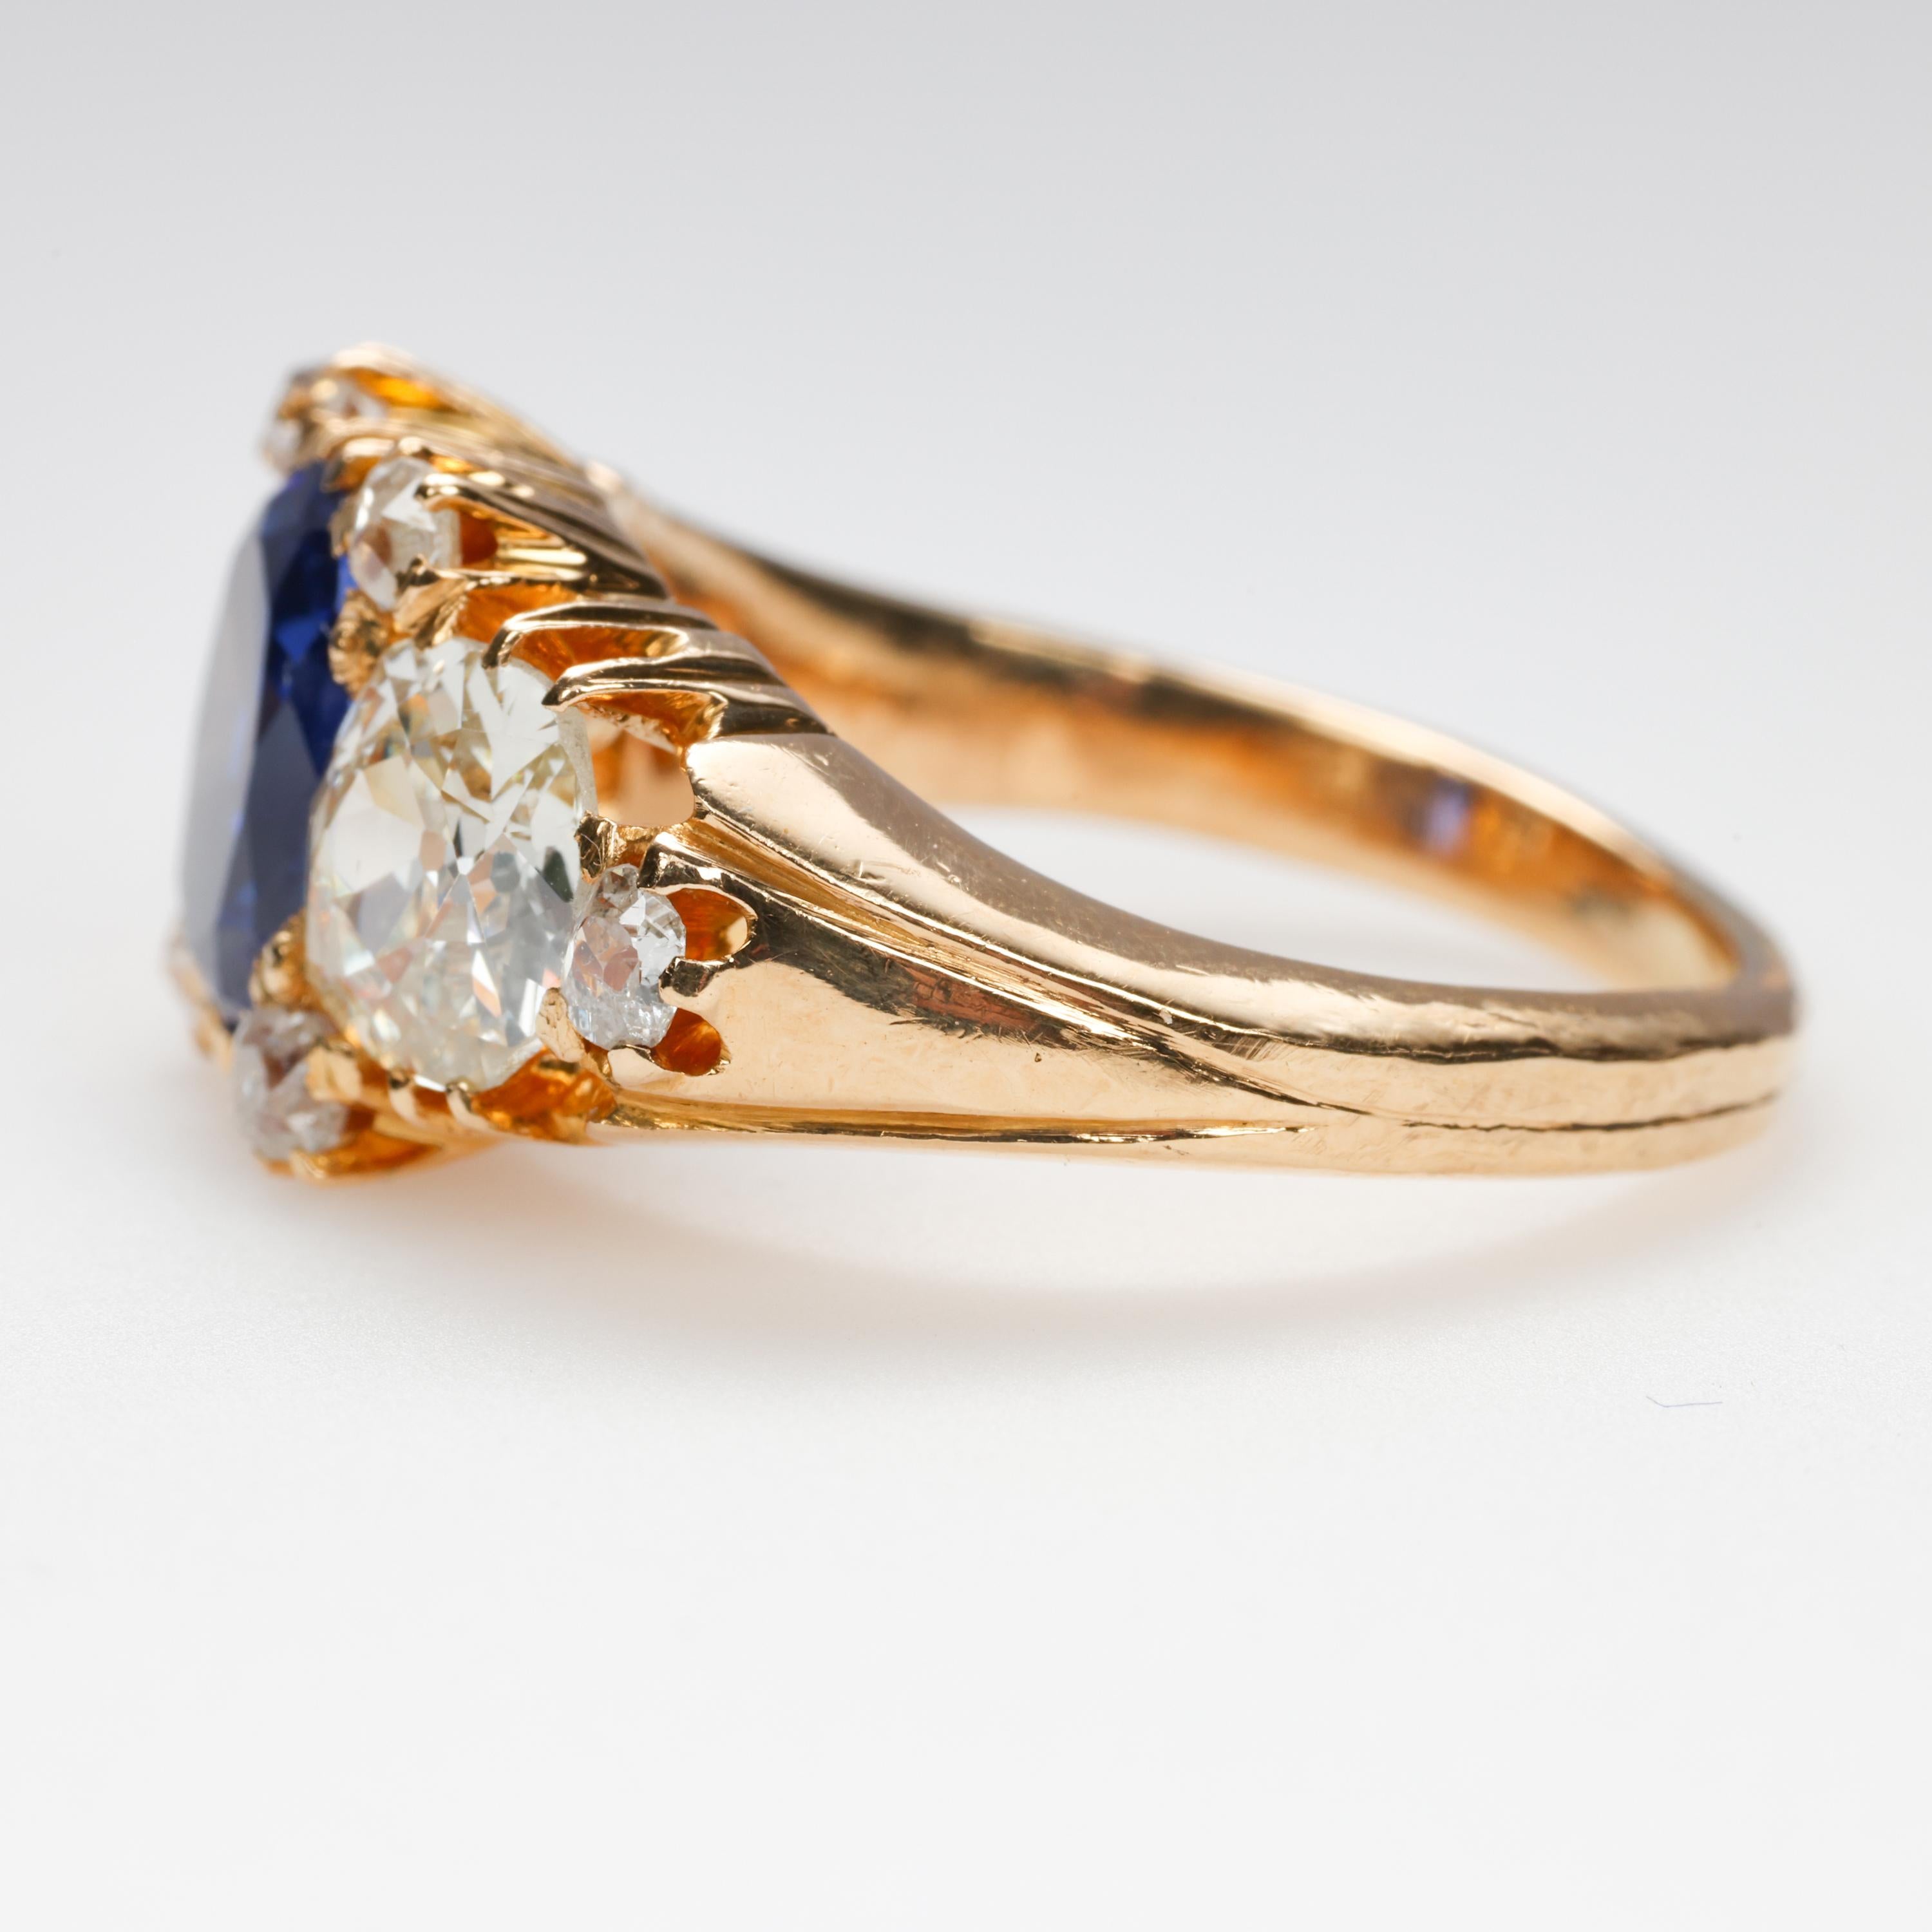 Kashmir Sapphire & Diamond Ring SSEF, AGL & GCS Certified No-Heat, 2-Carat Stone 1